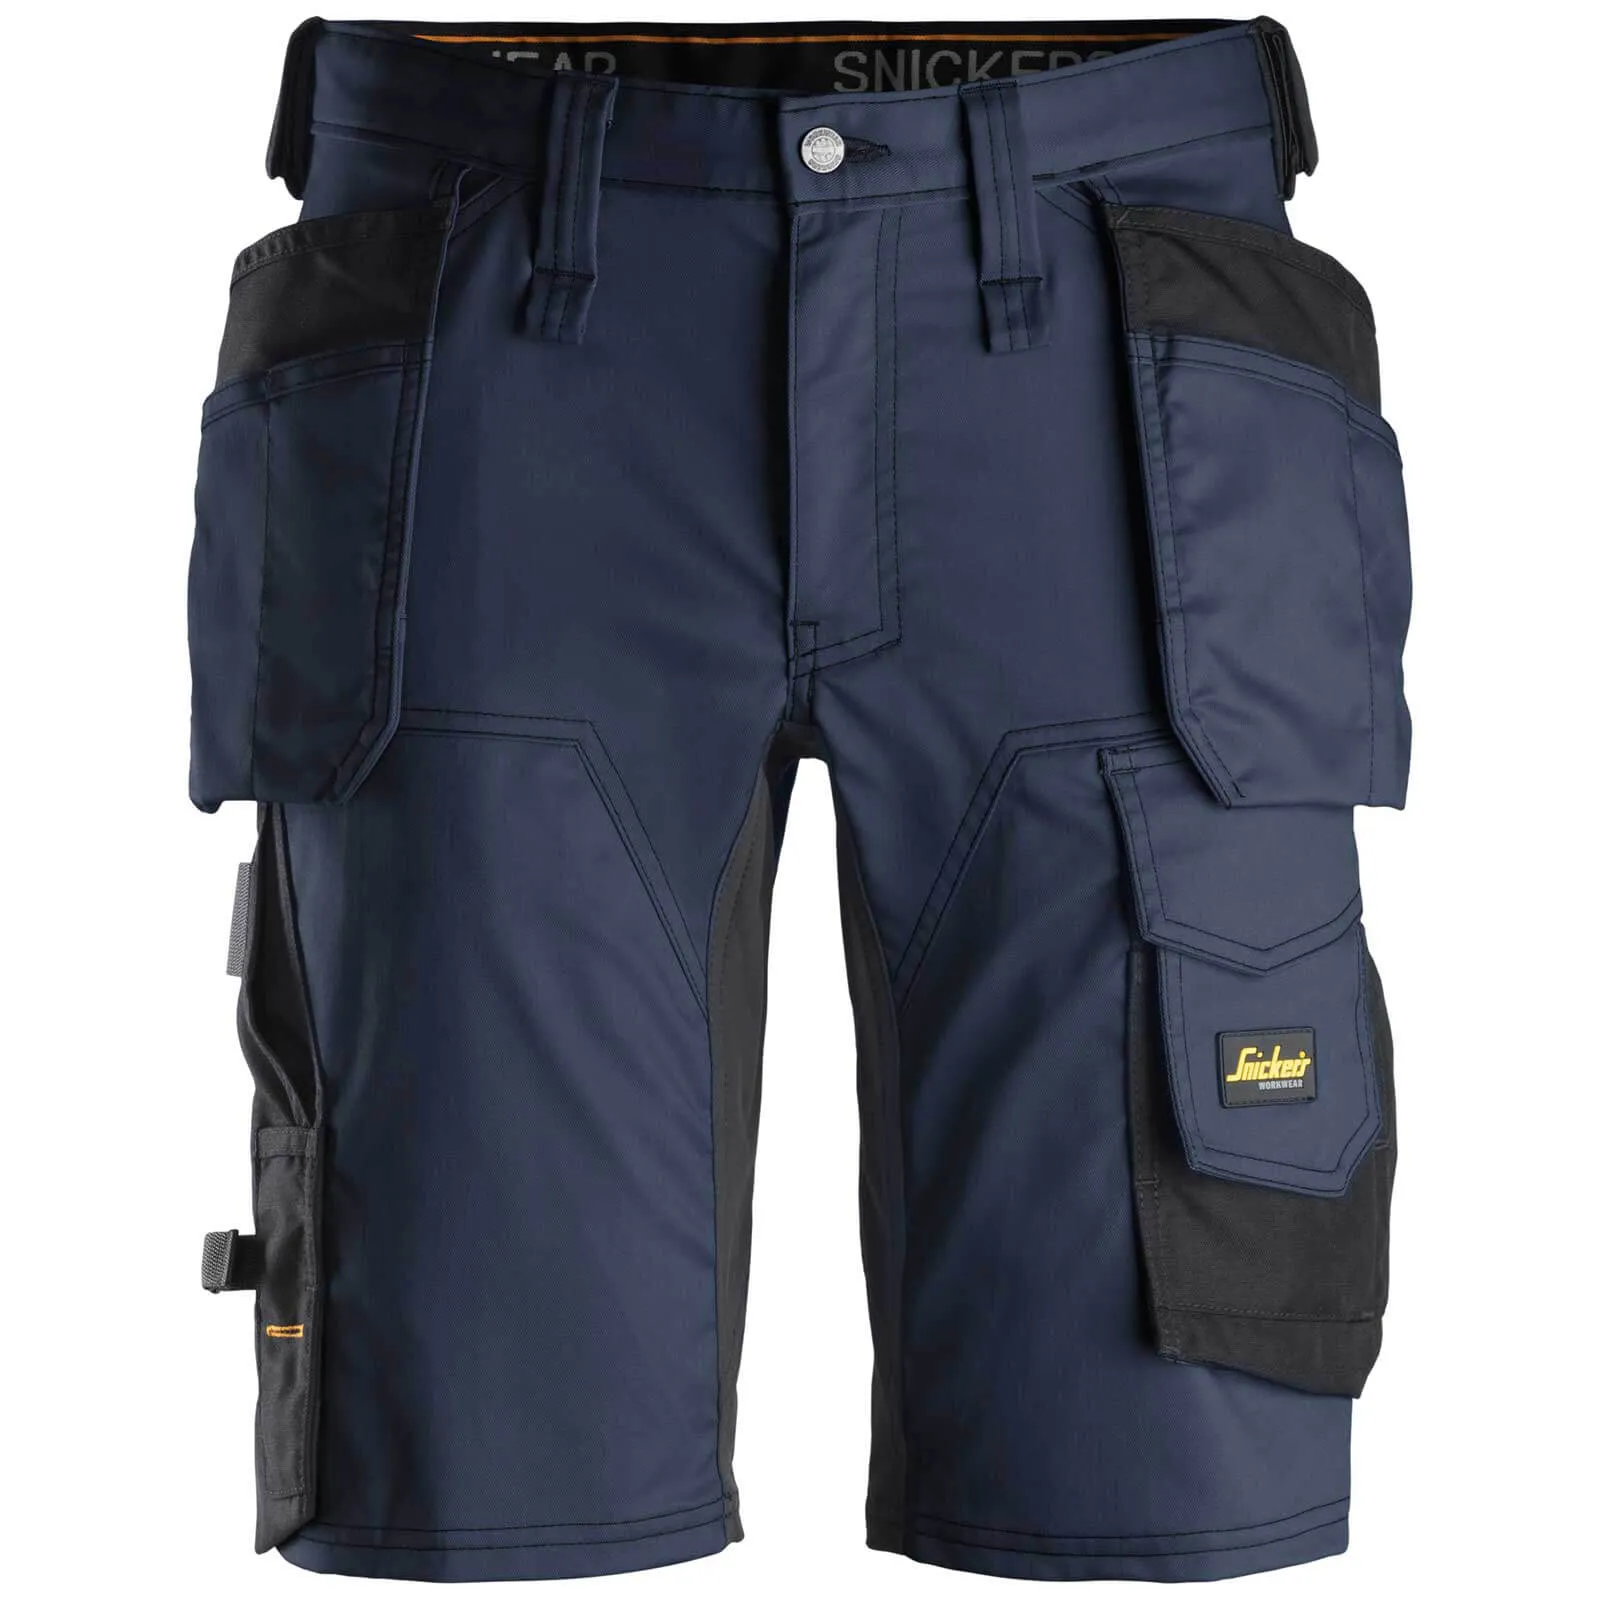 Snickers 6141 Allround Work Stretch Slim Fit Holster Pockets Shorts - Navy / Black, 33"